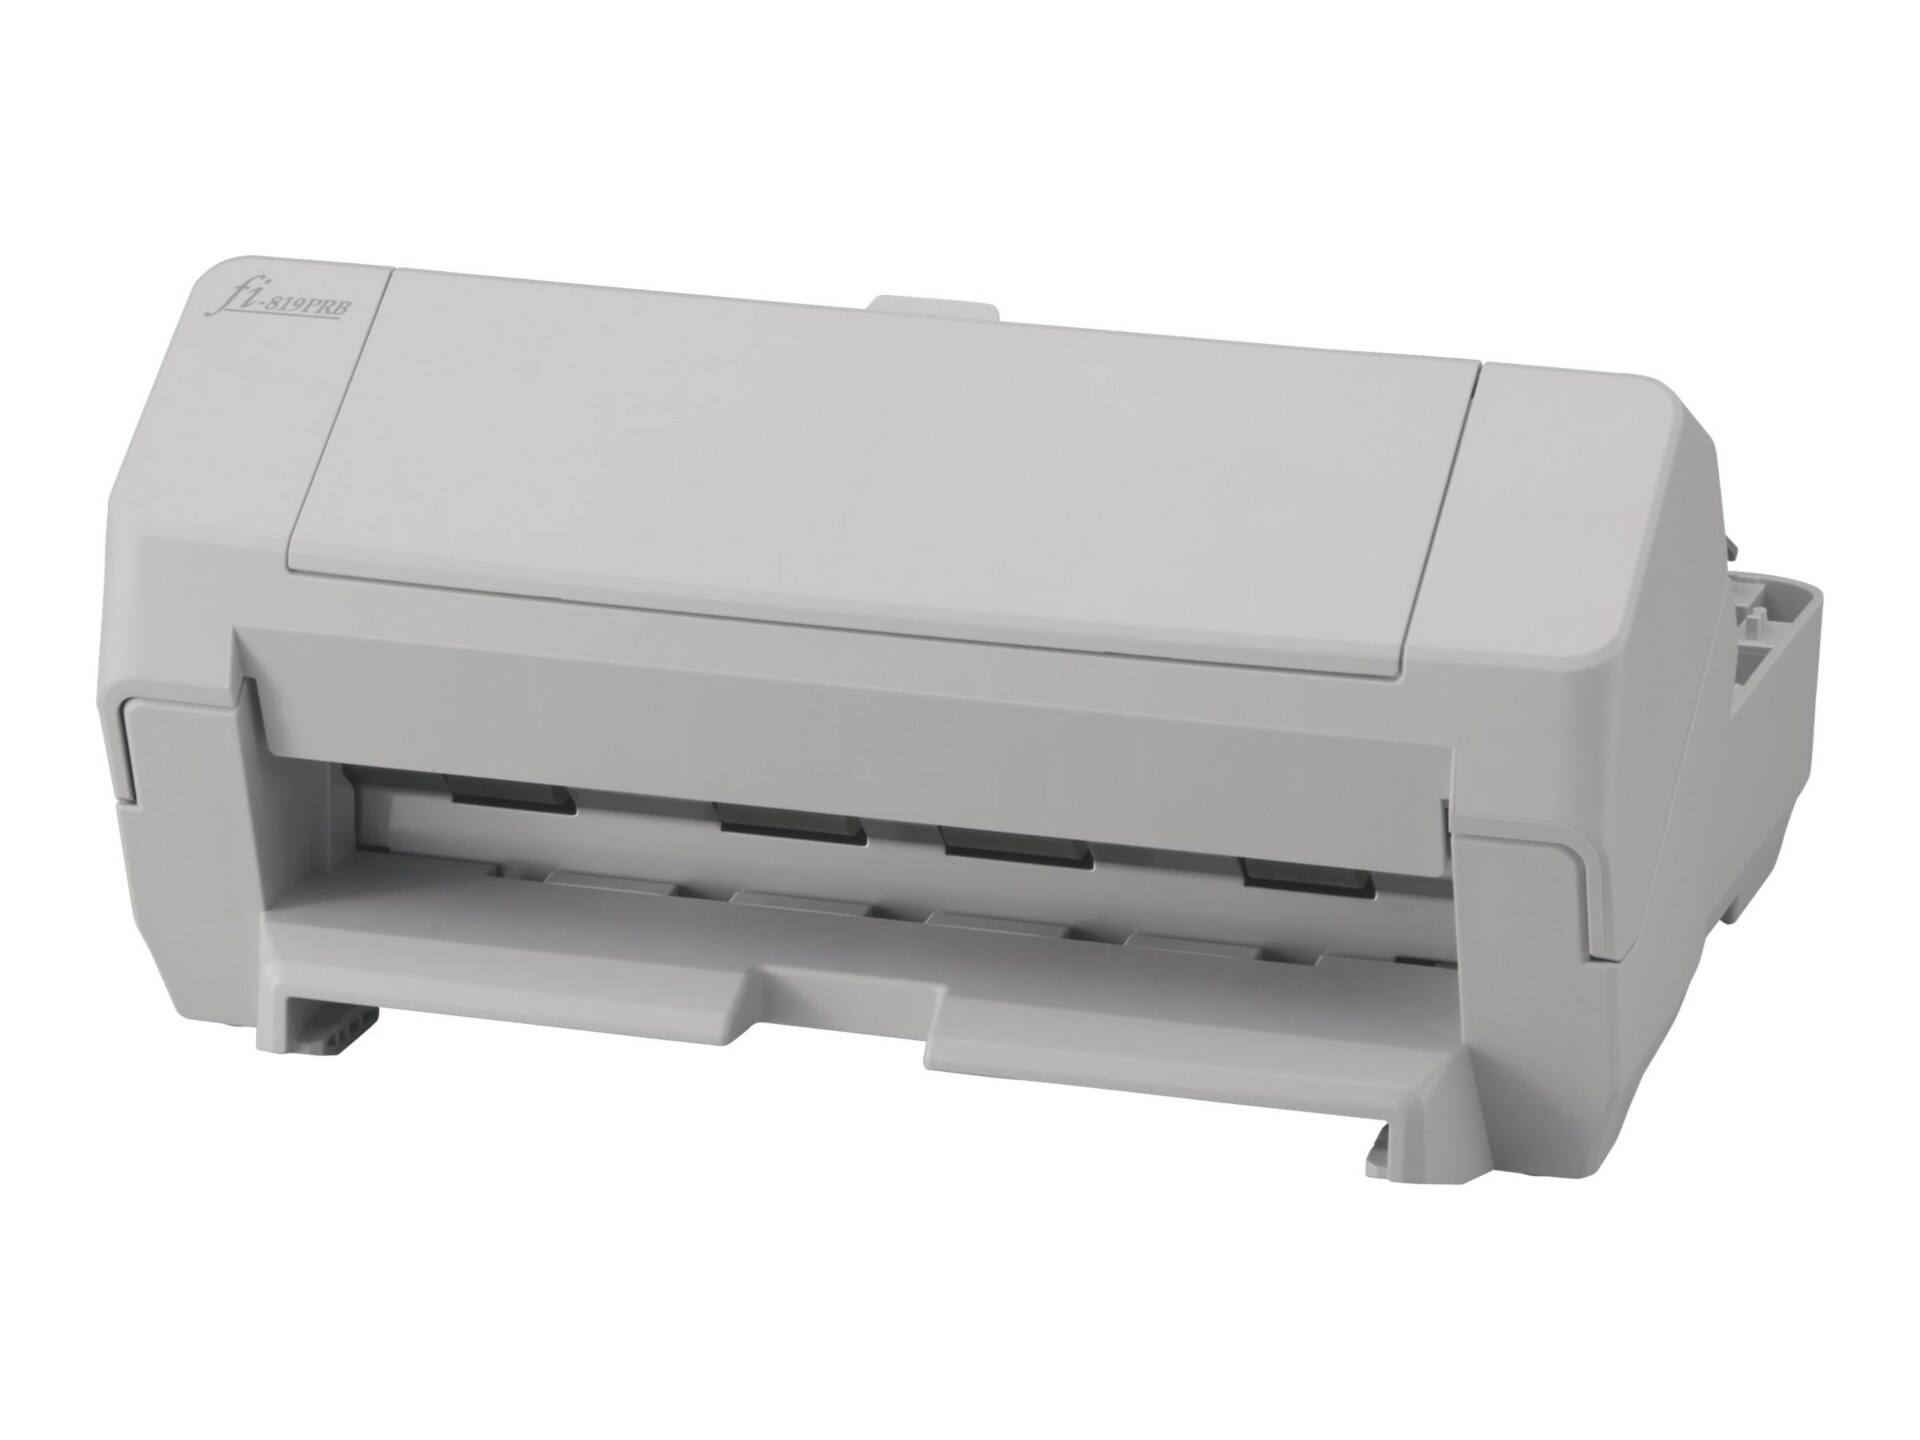 Ricoh imprimante de poste de scanner